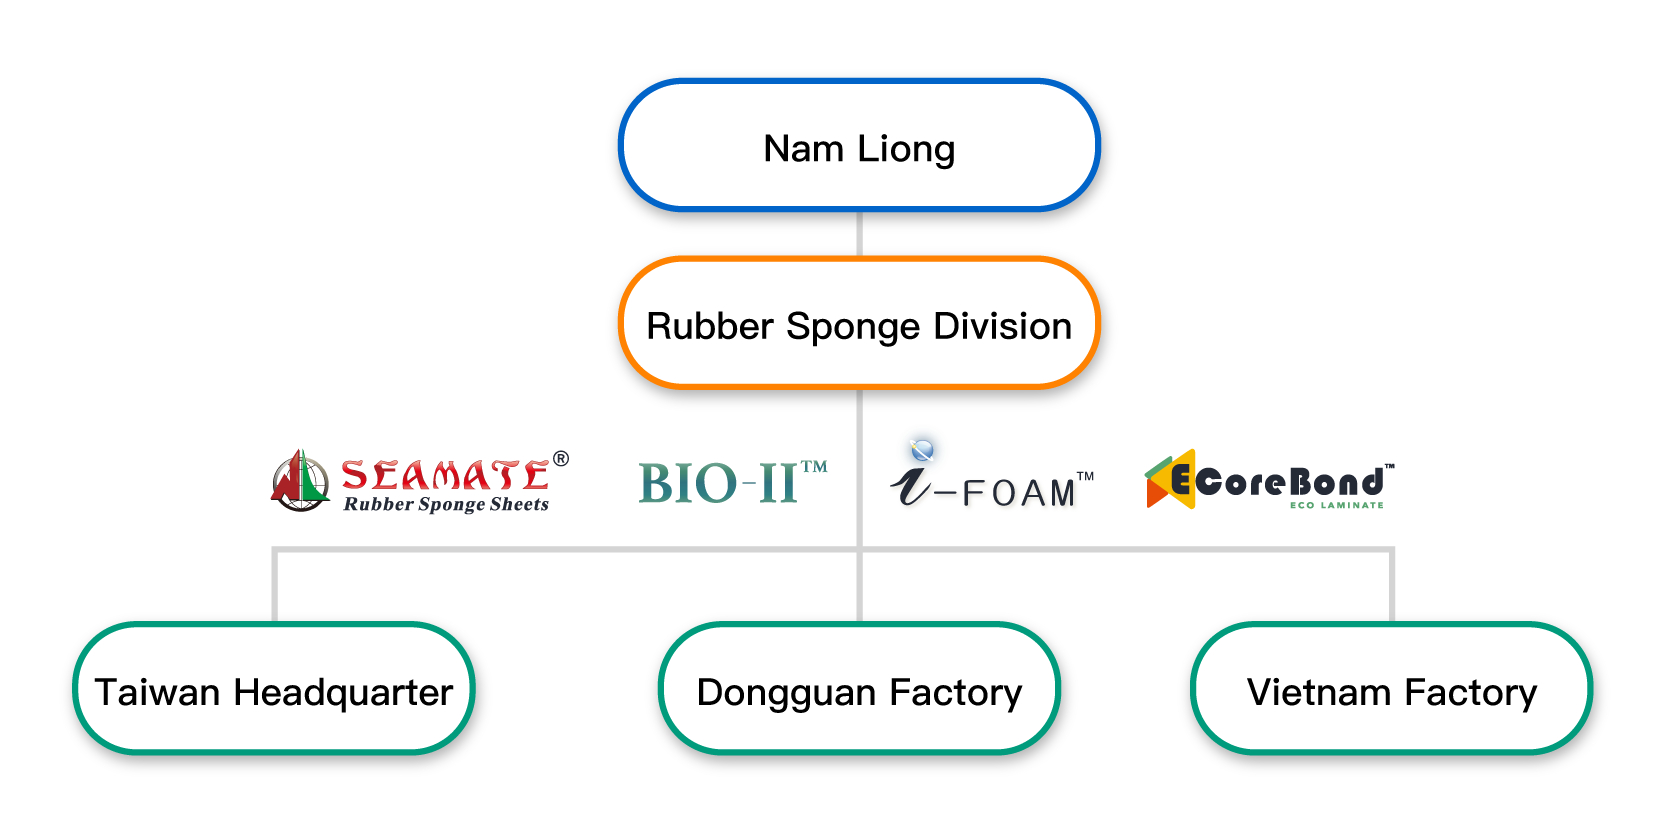 Rubber Sponge organization and brand names